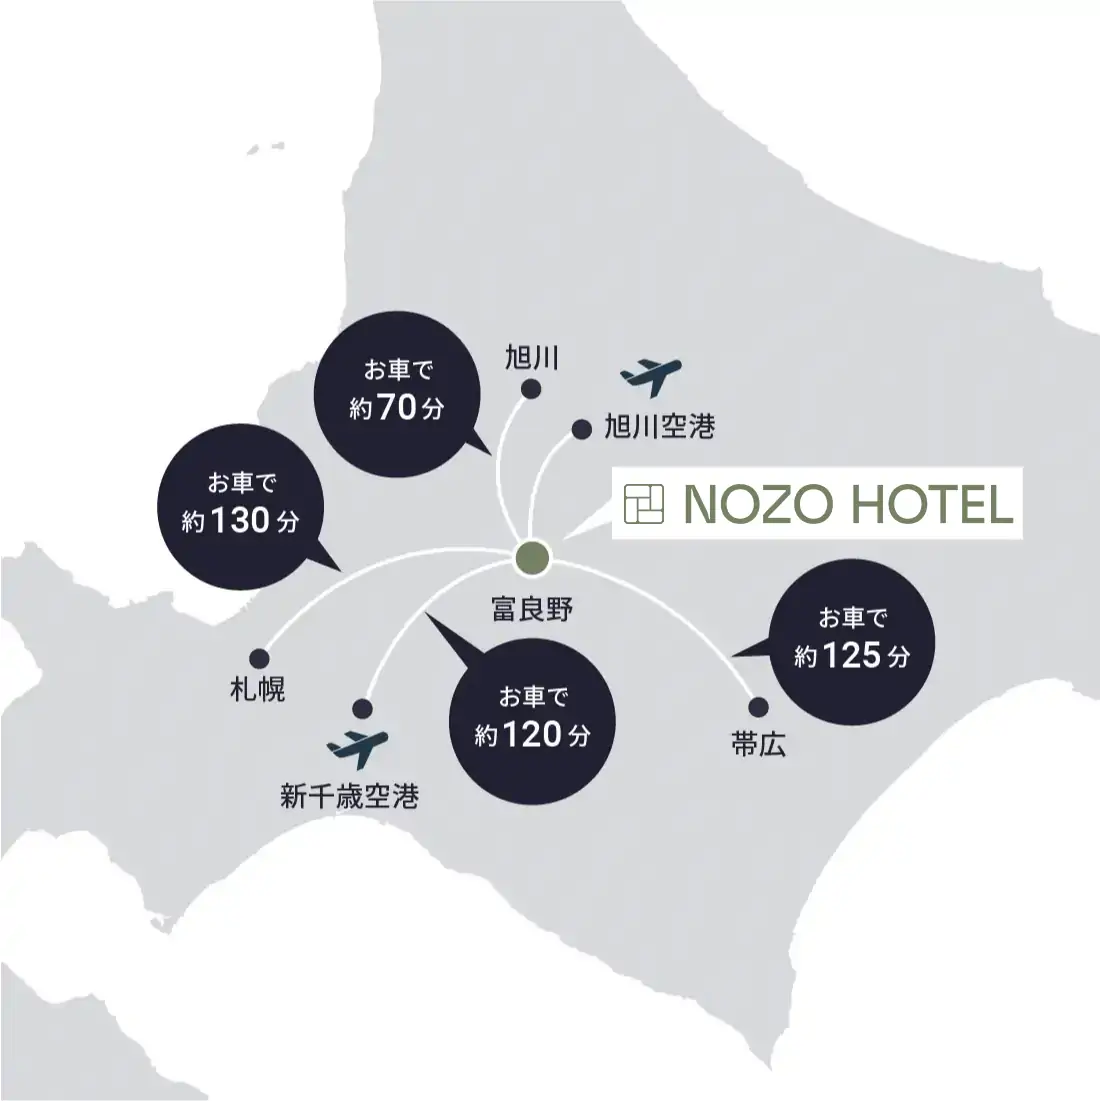 Nozo Hotel, Map access